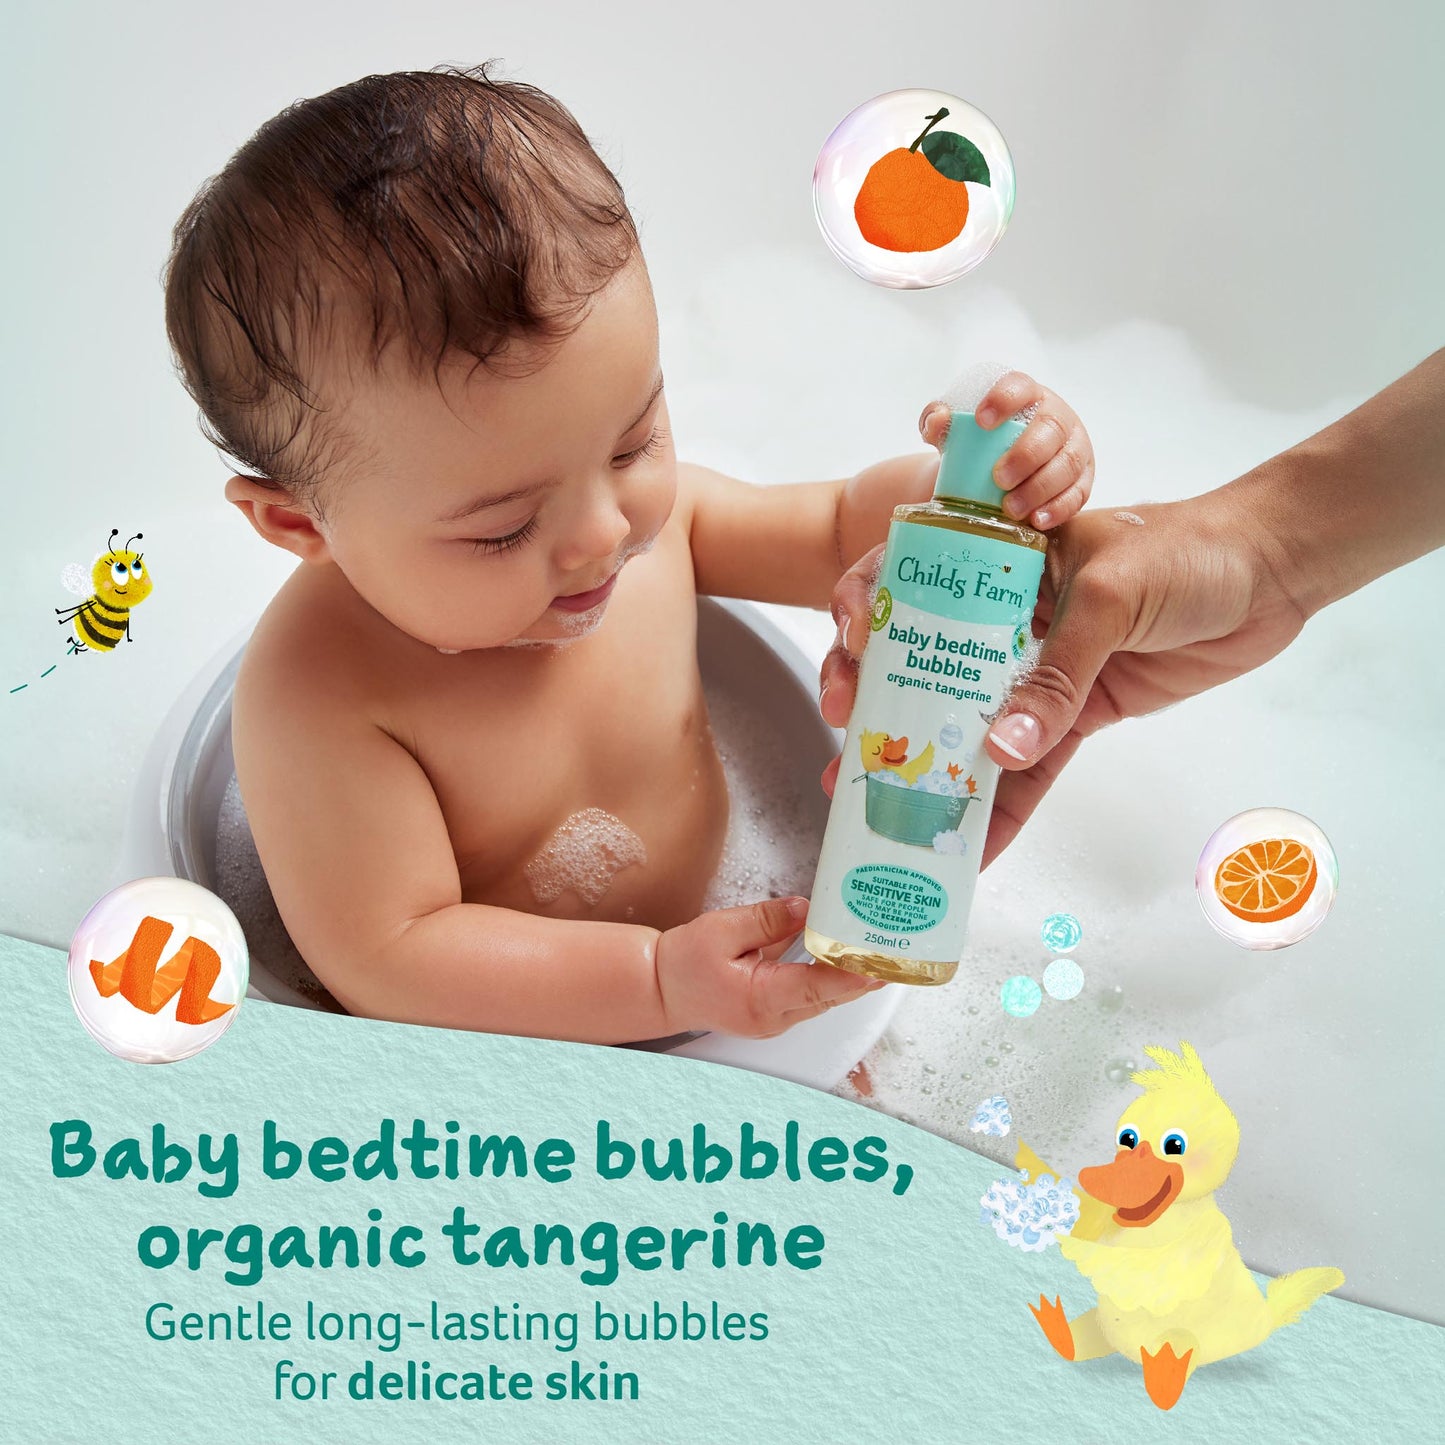 Childs Farm baby bedtime bubbles organic tangerine